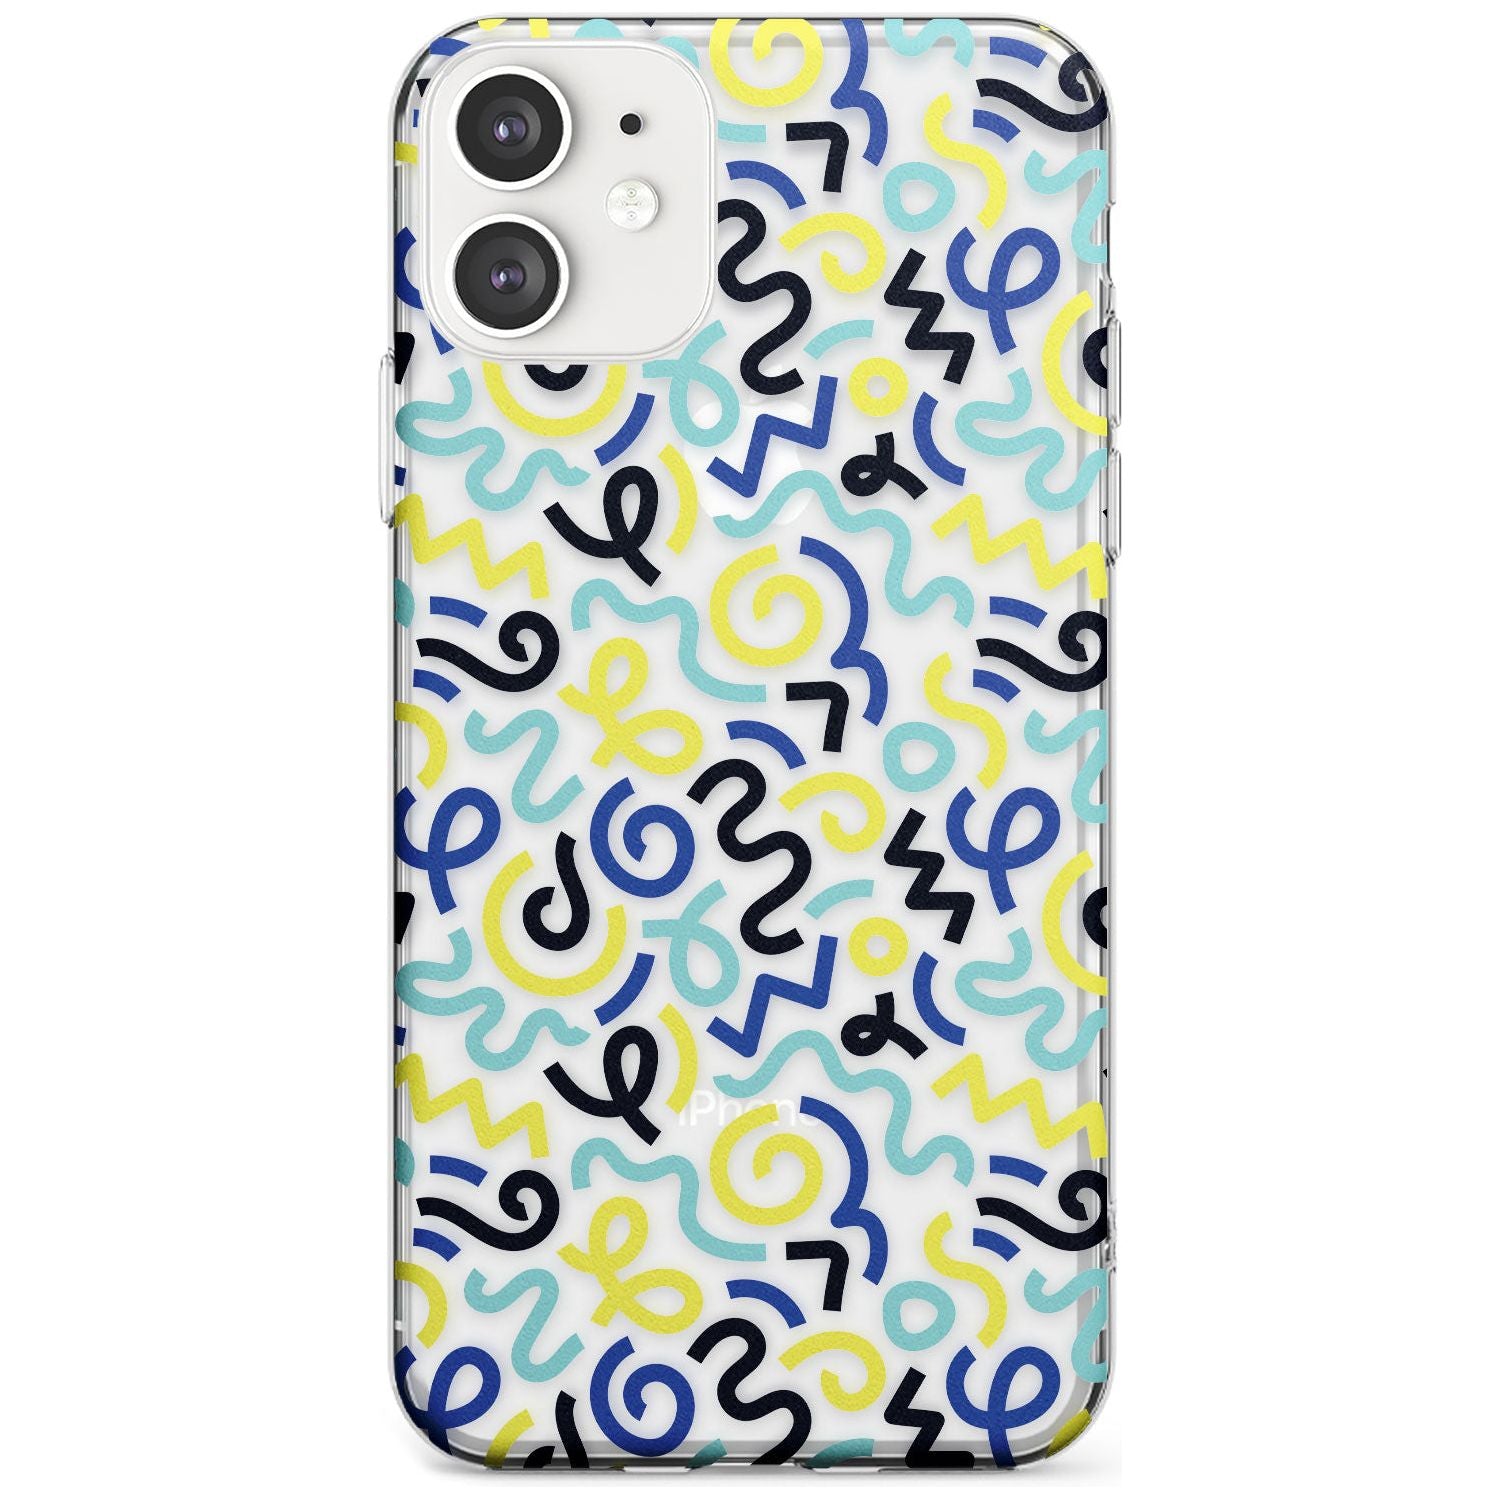 Blue & Yellow Shapes Memphis Retro Pattern Design Slim TPU Phone Case for iPhone 11